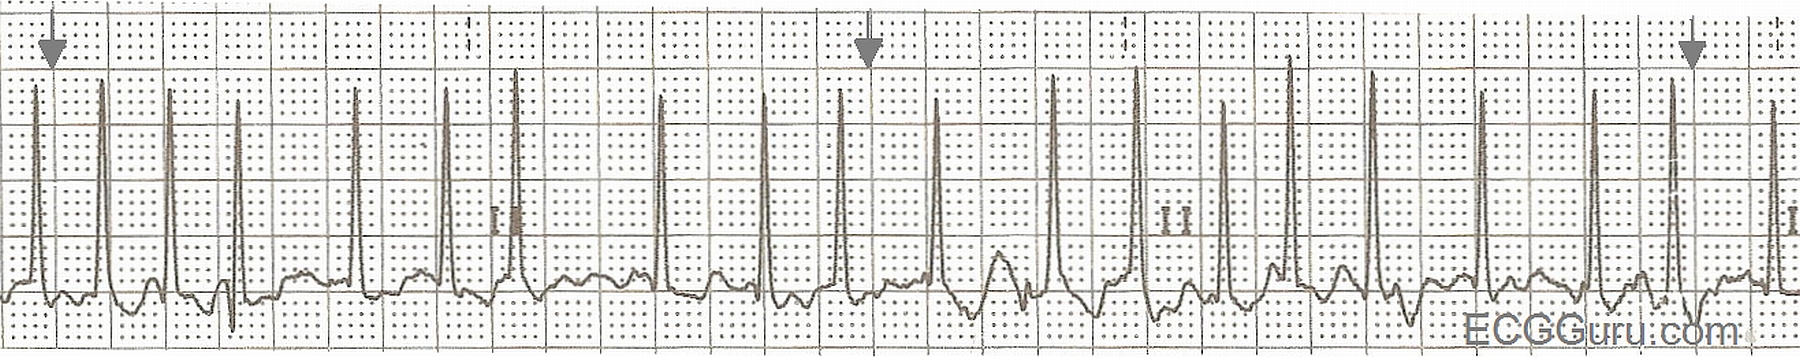 ECG Basics: Atrial Fibrillation With A Rapid Ventricular Response ...